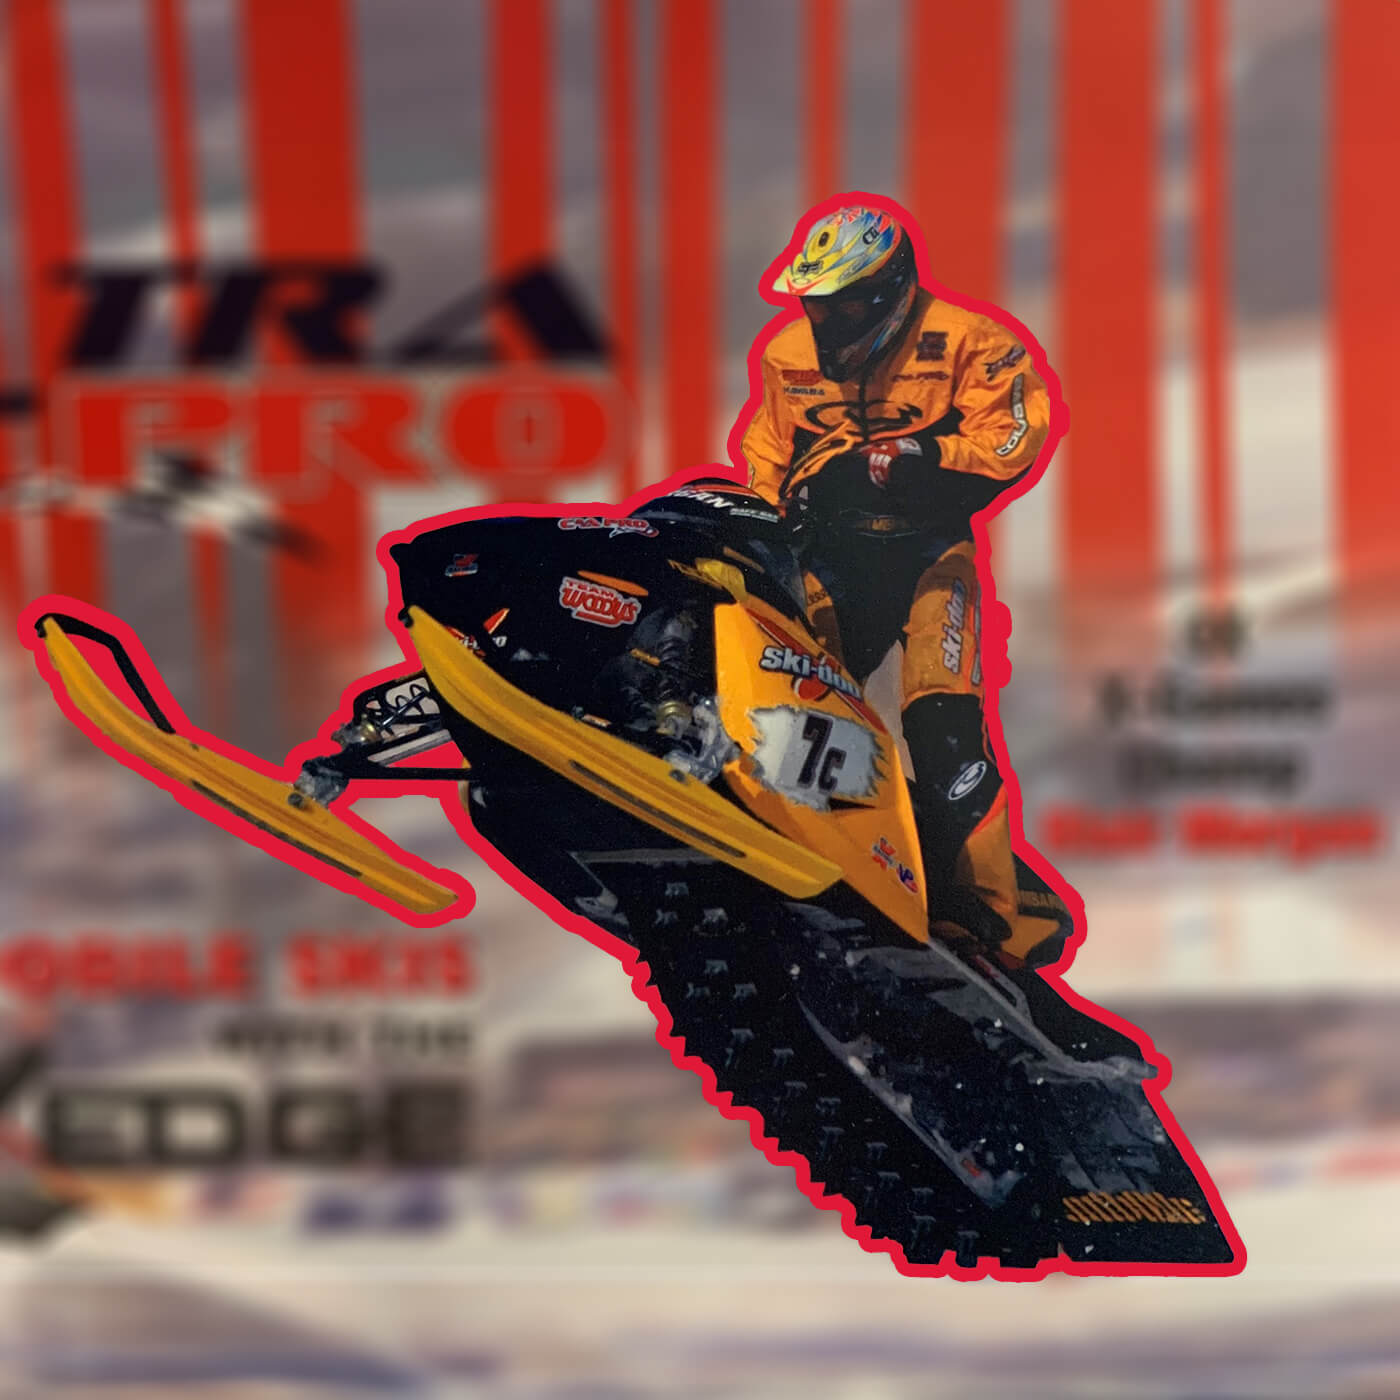 Snocross racer Blair Morgan 7C on Ski-Doo snowmobile with C&A Pro Skis